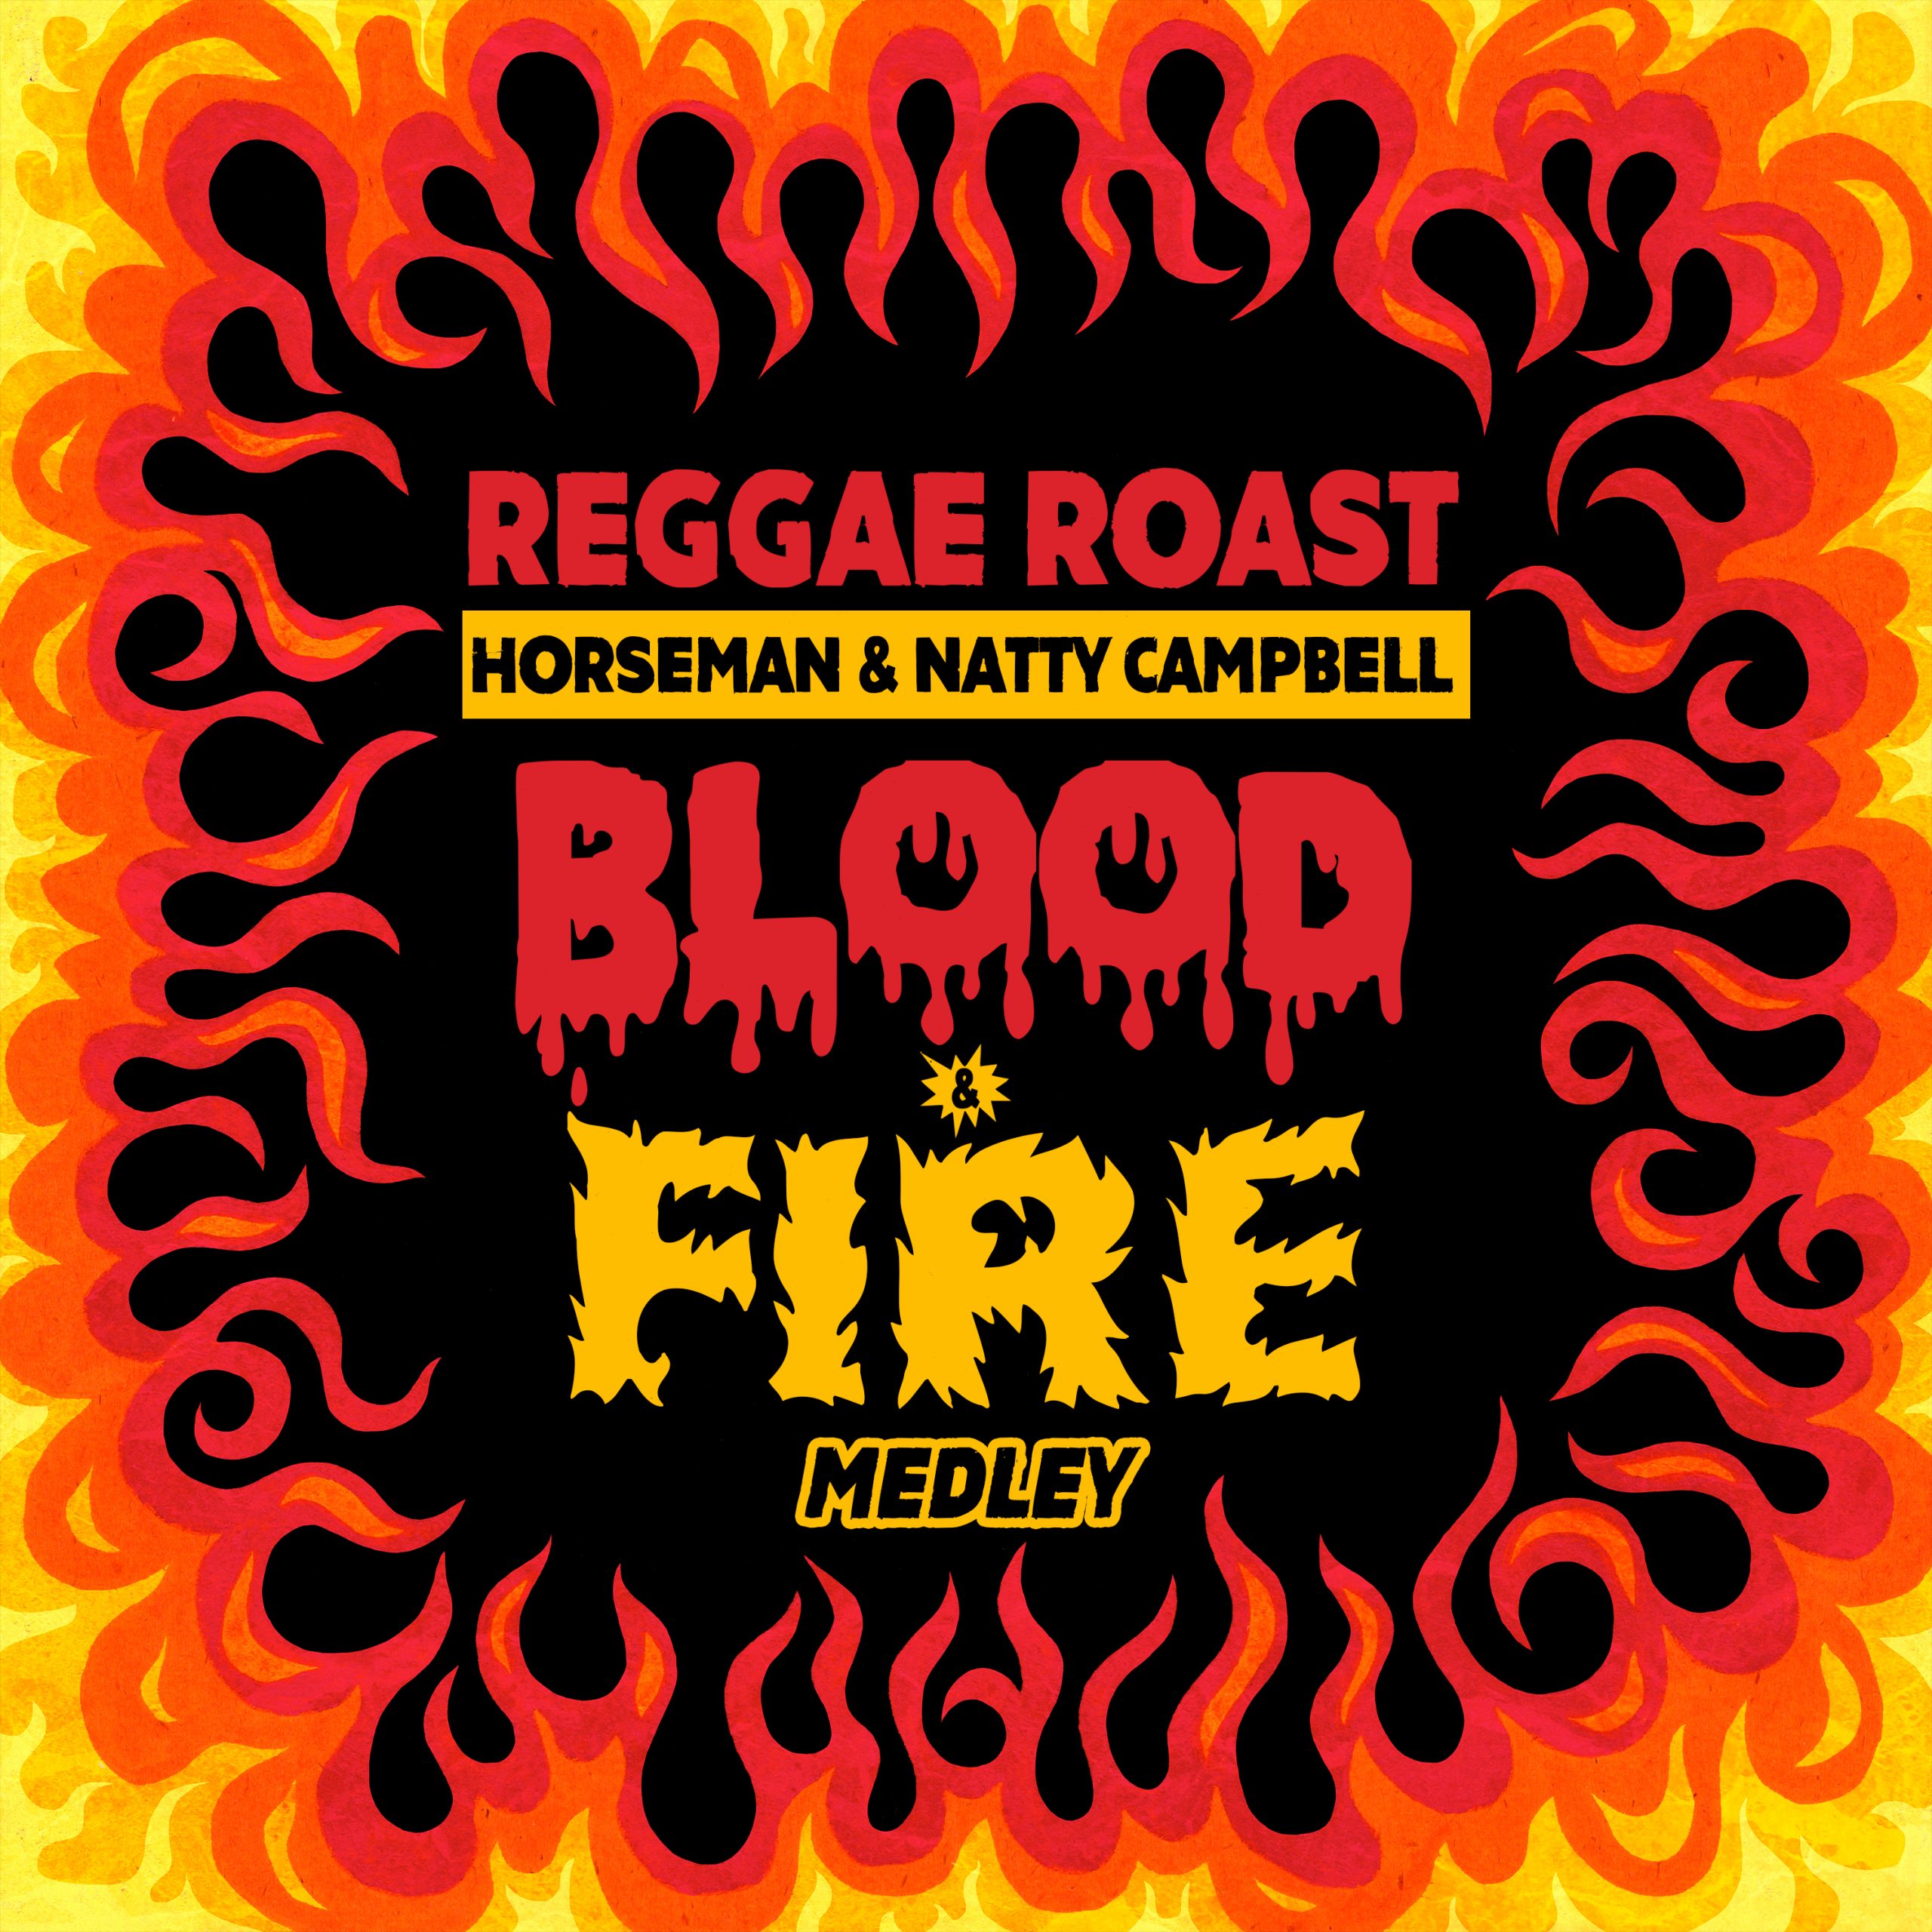 Reggae Roast - Blood & Fire